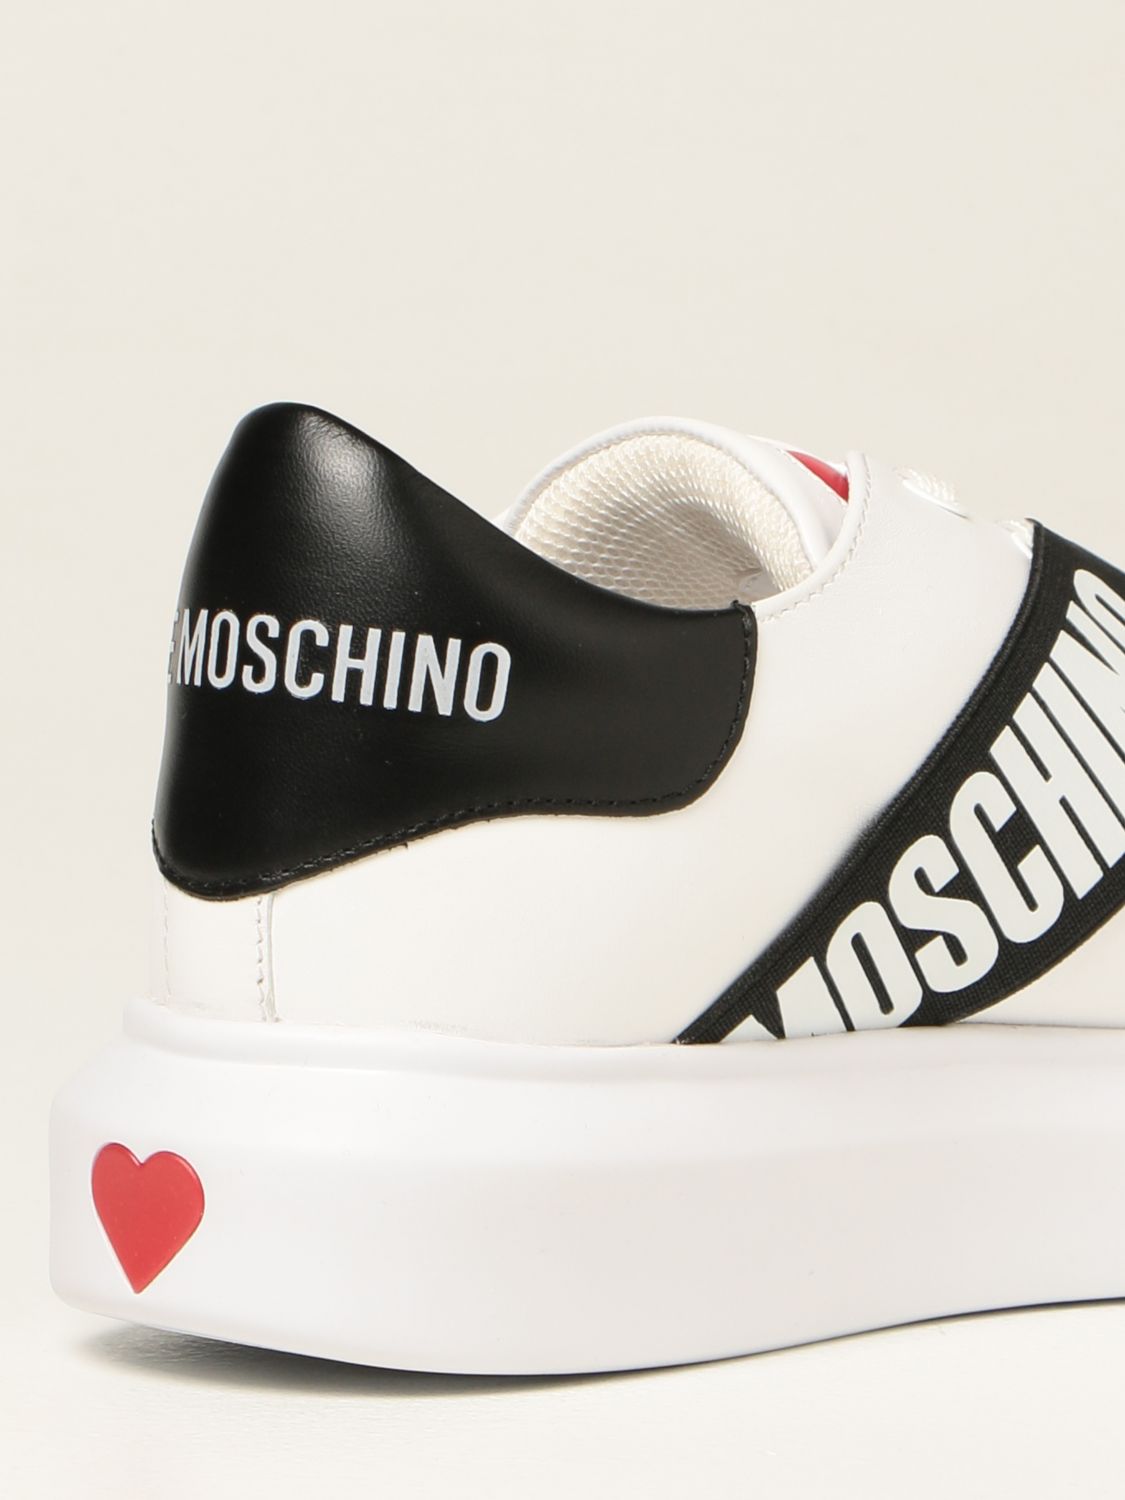 moschino logo sneakers Off 76% - www.gmcanantnag.net